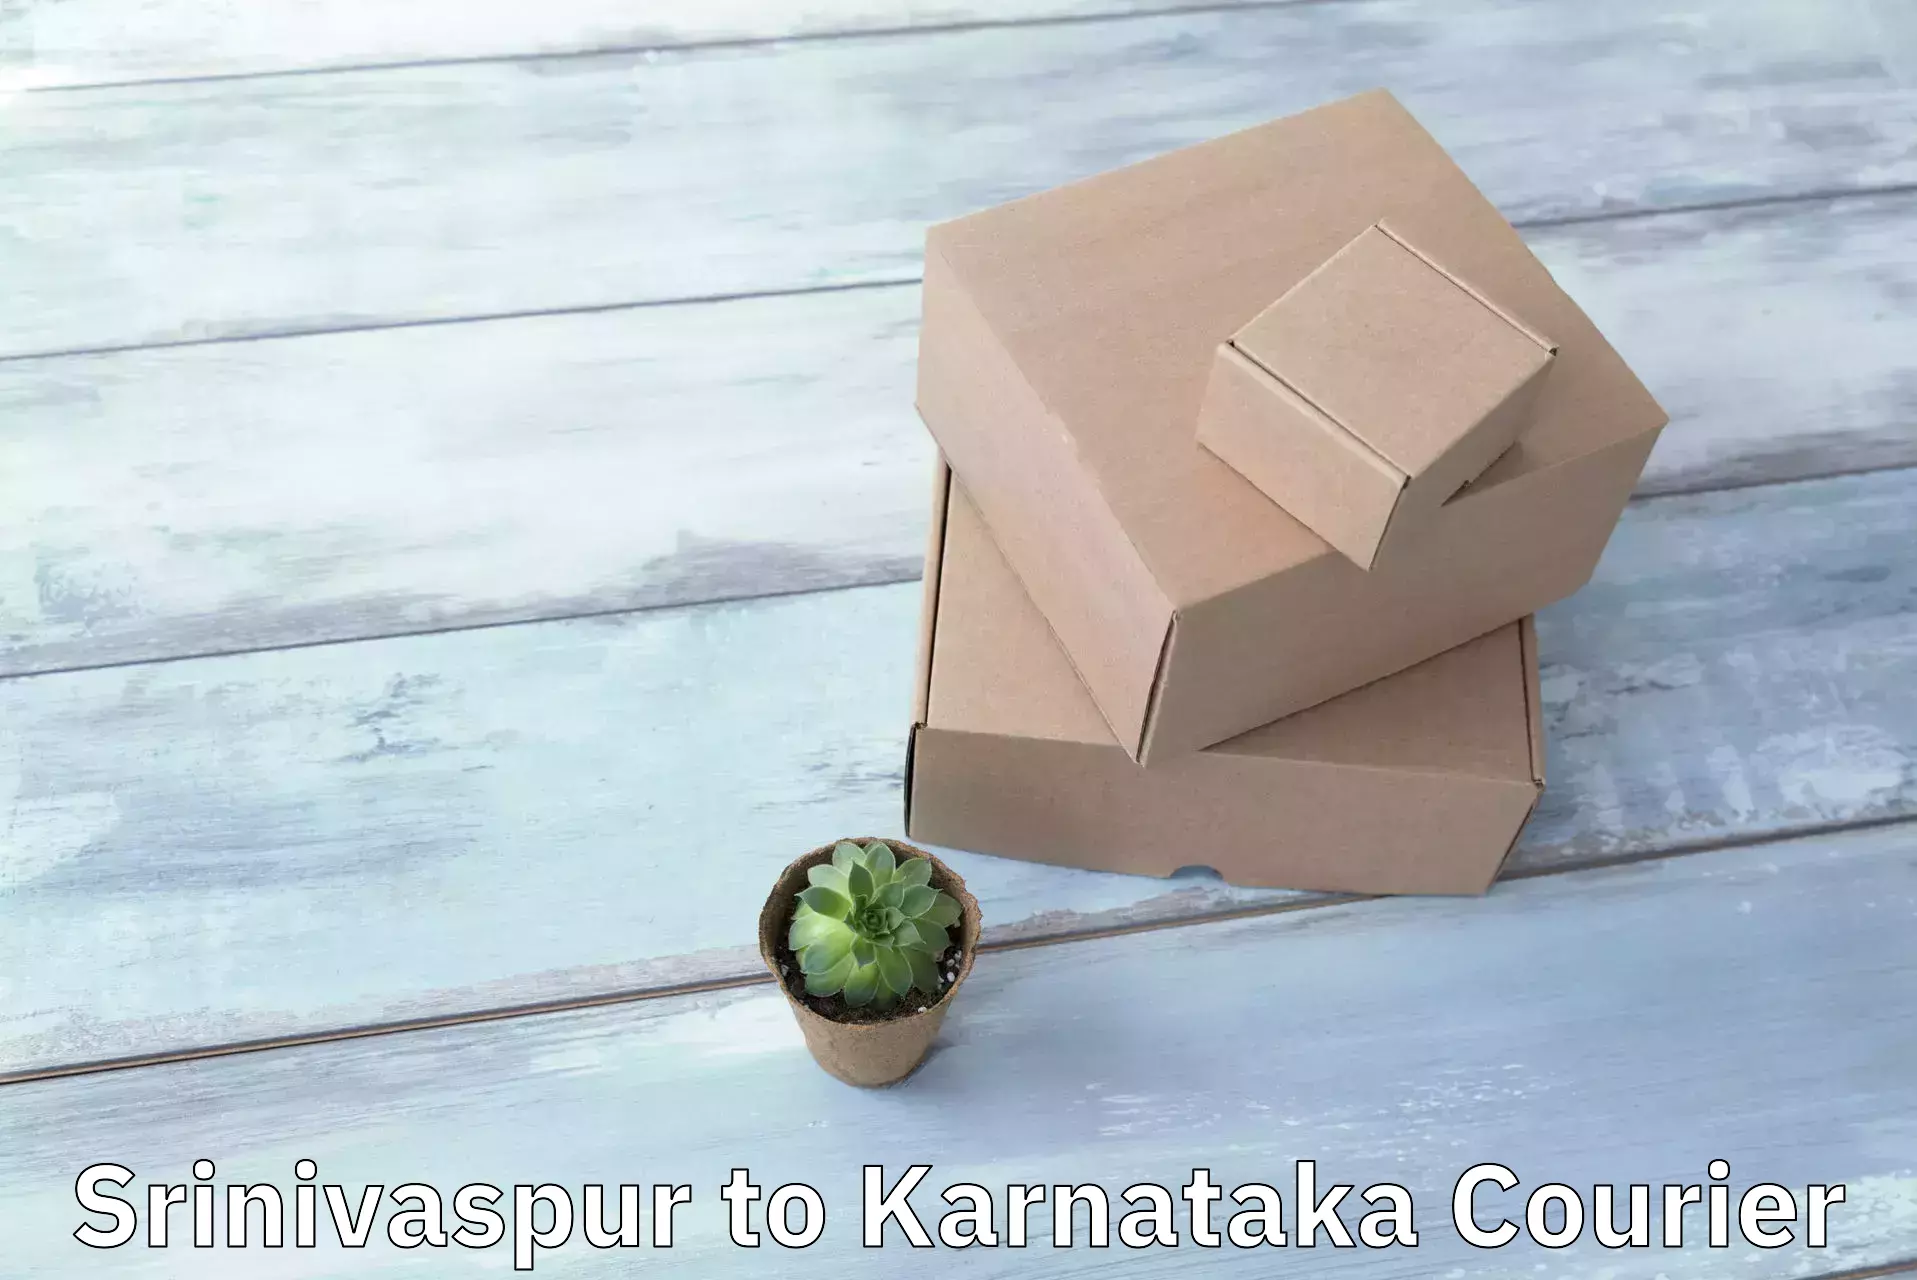 Trackable shipping service Srinivaspur to Karnataka